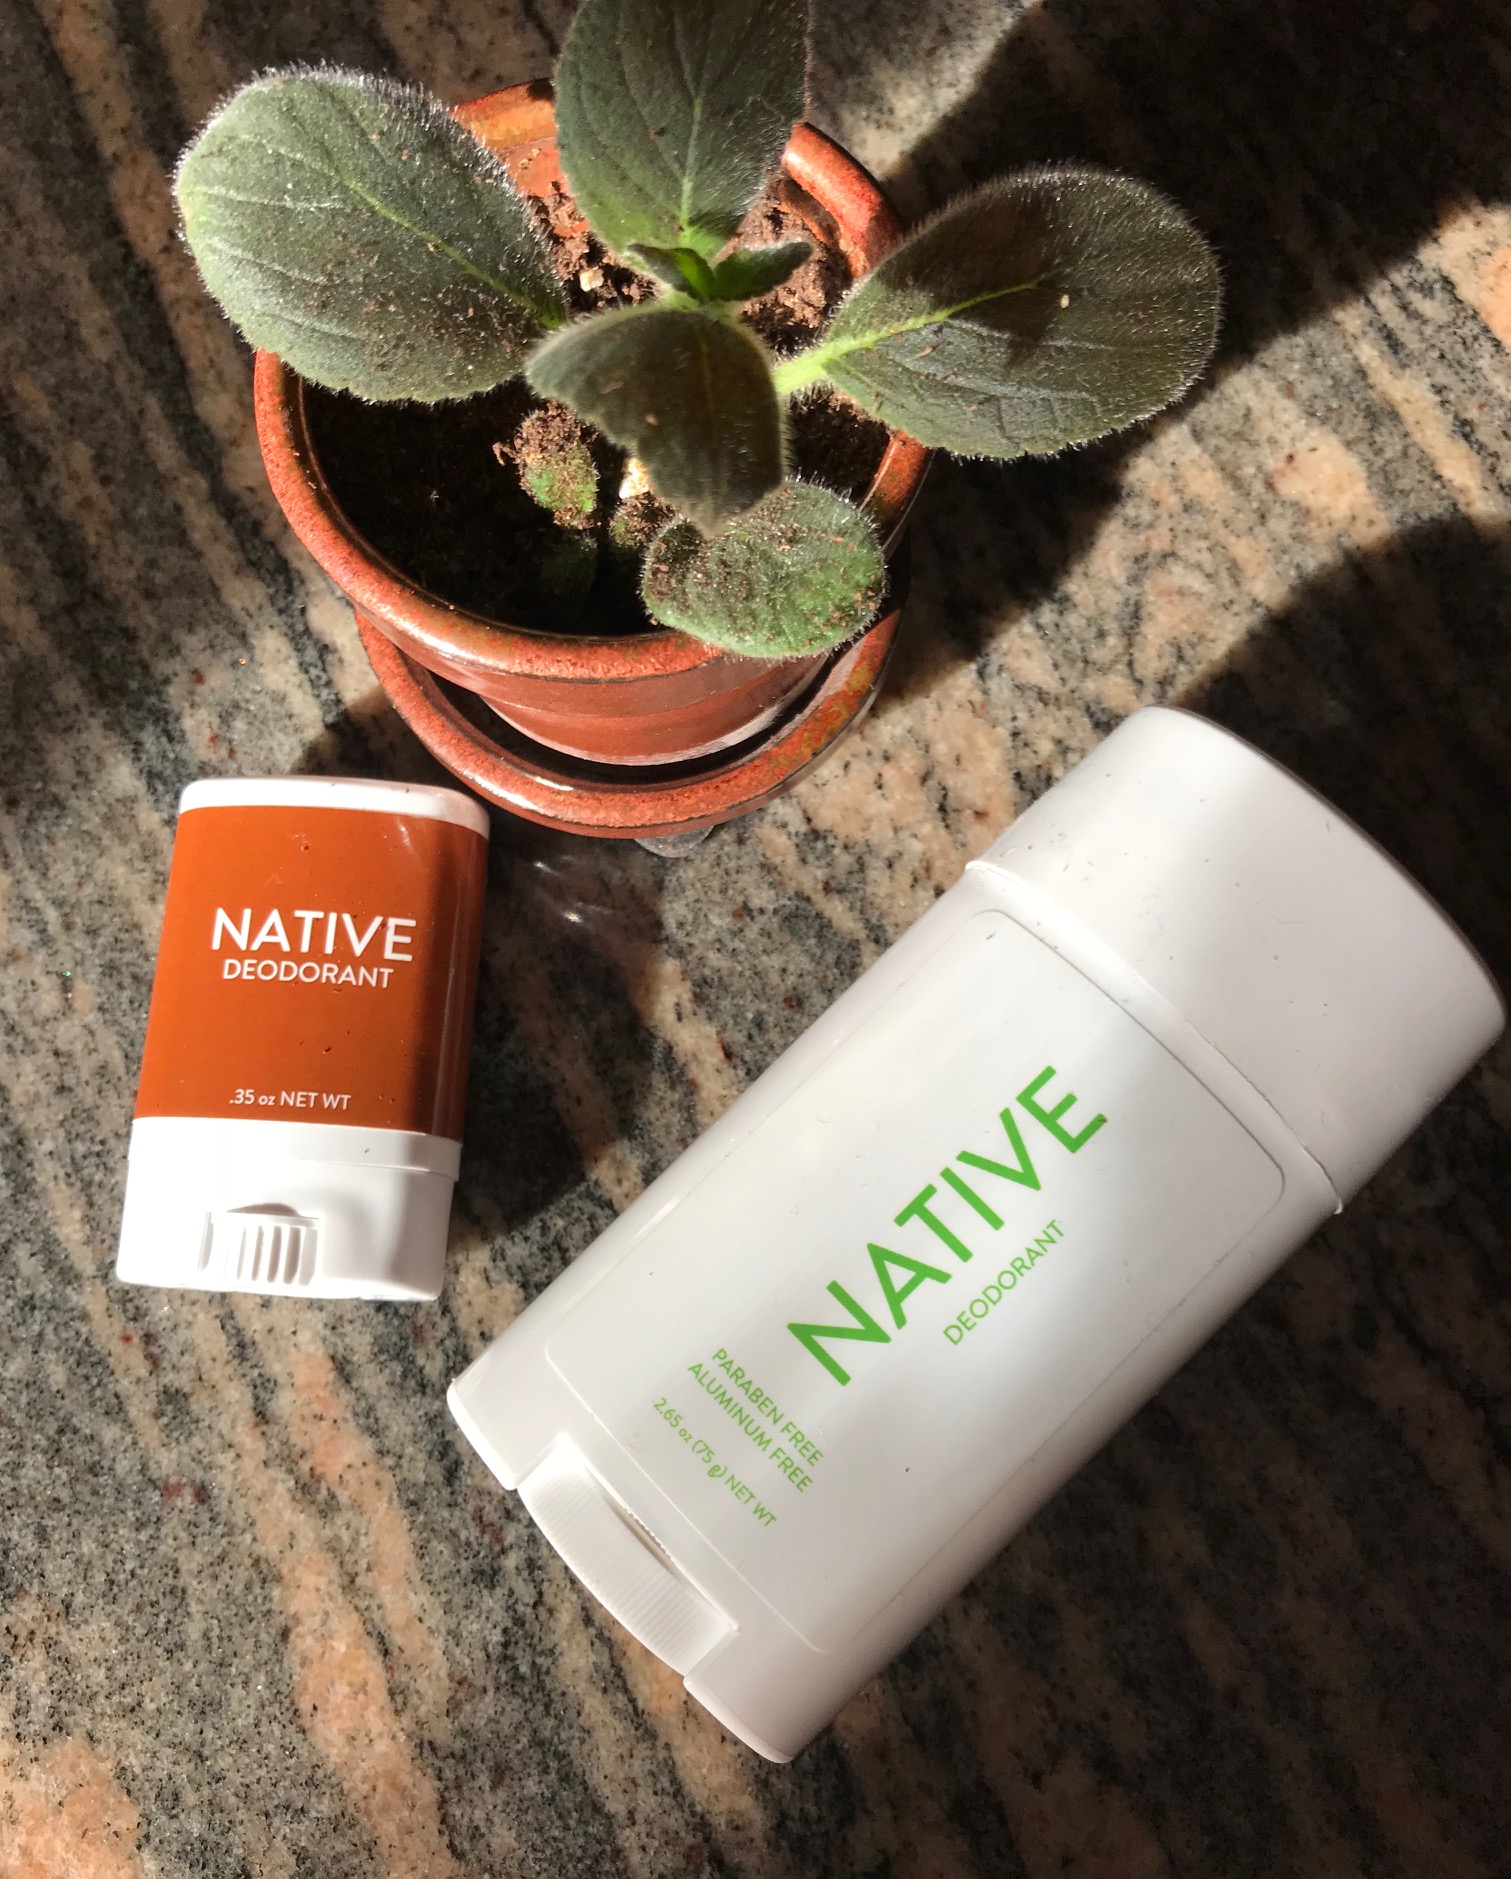 Native Deodorant: Natural Deodorant That Works! | Never Say Die Beauty